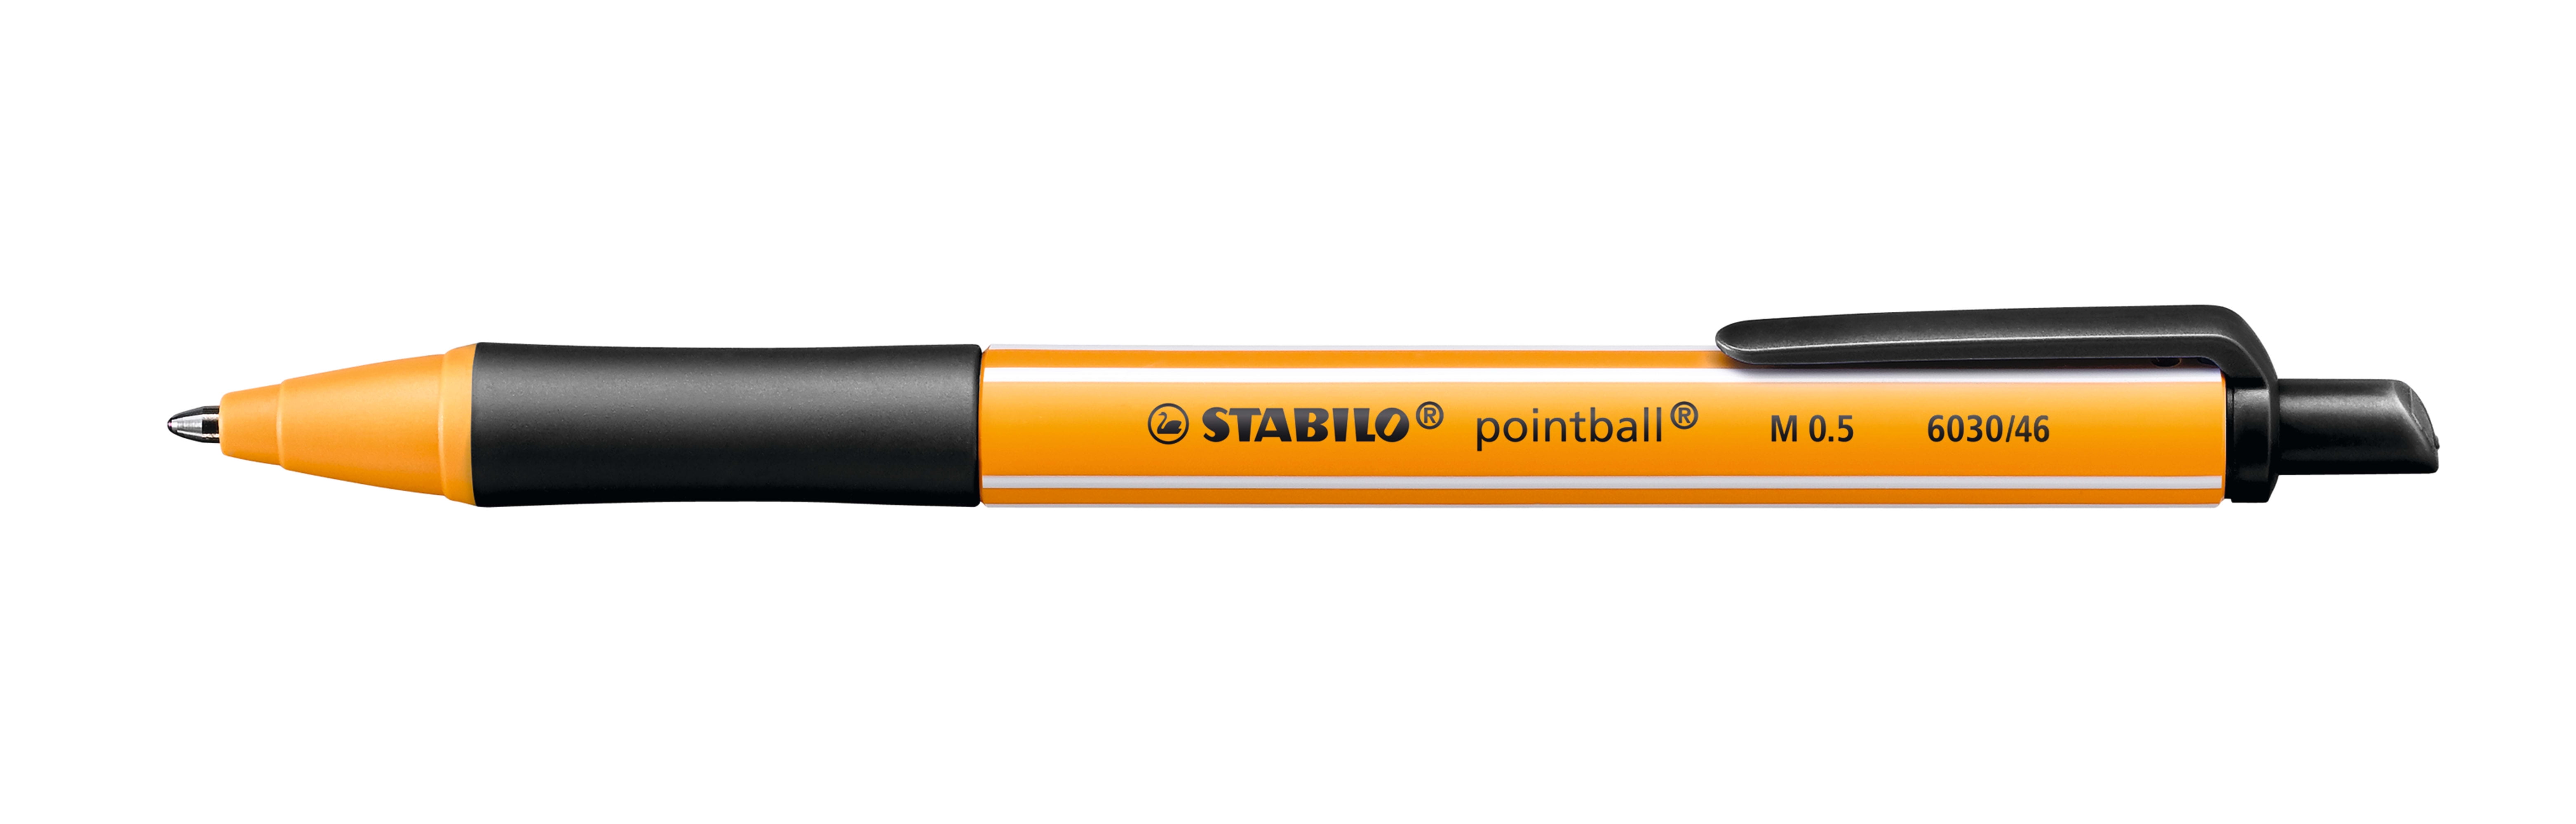 STABILO pointball Pen, Black